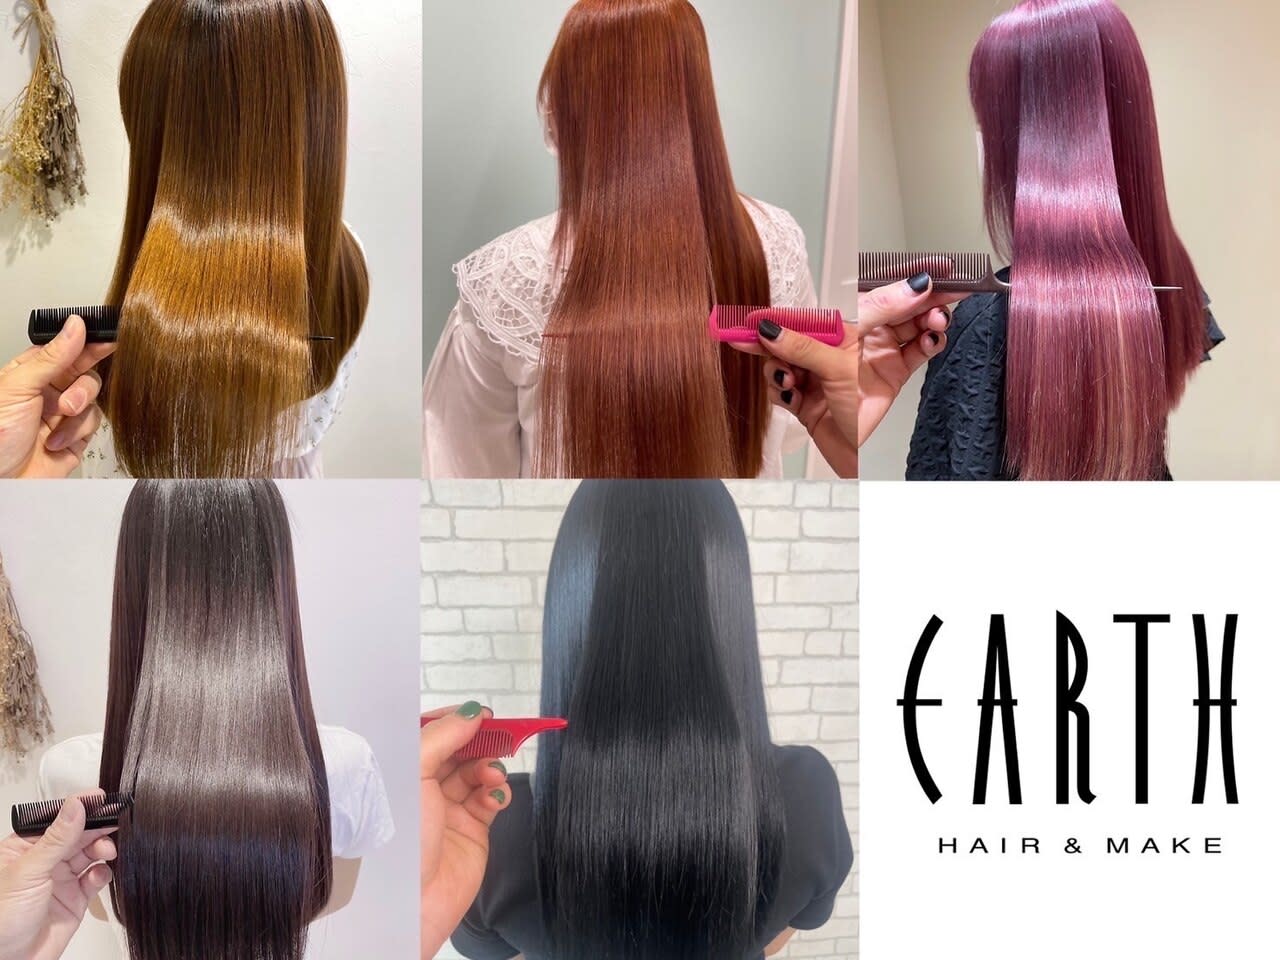 HAIR & MAKE EARTH 鶴見店のアイキャッチ画像